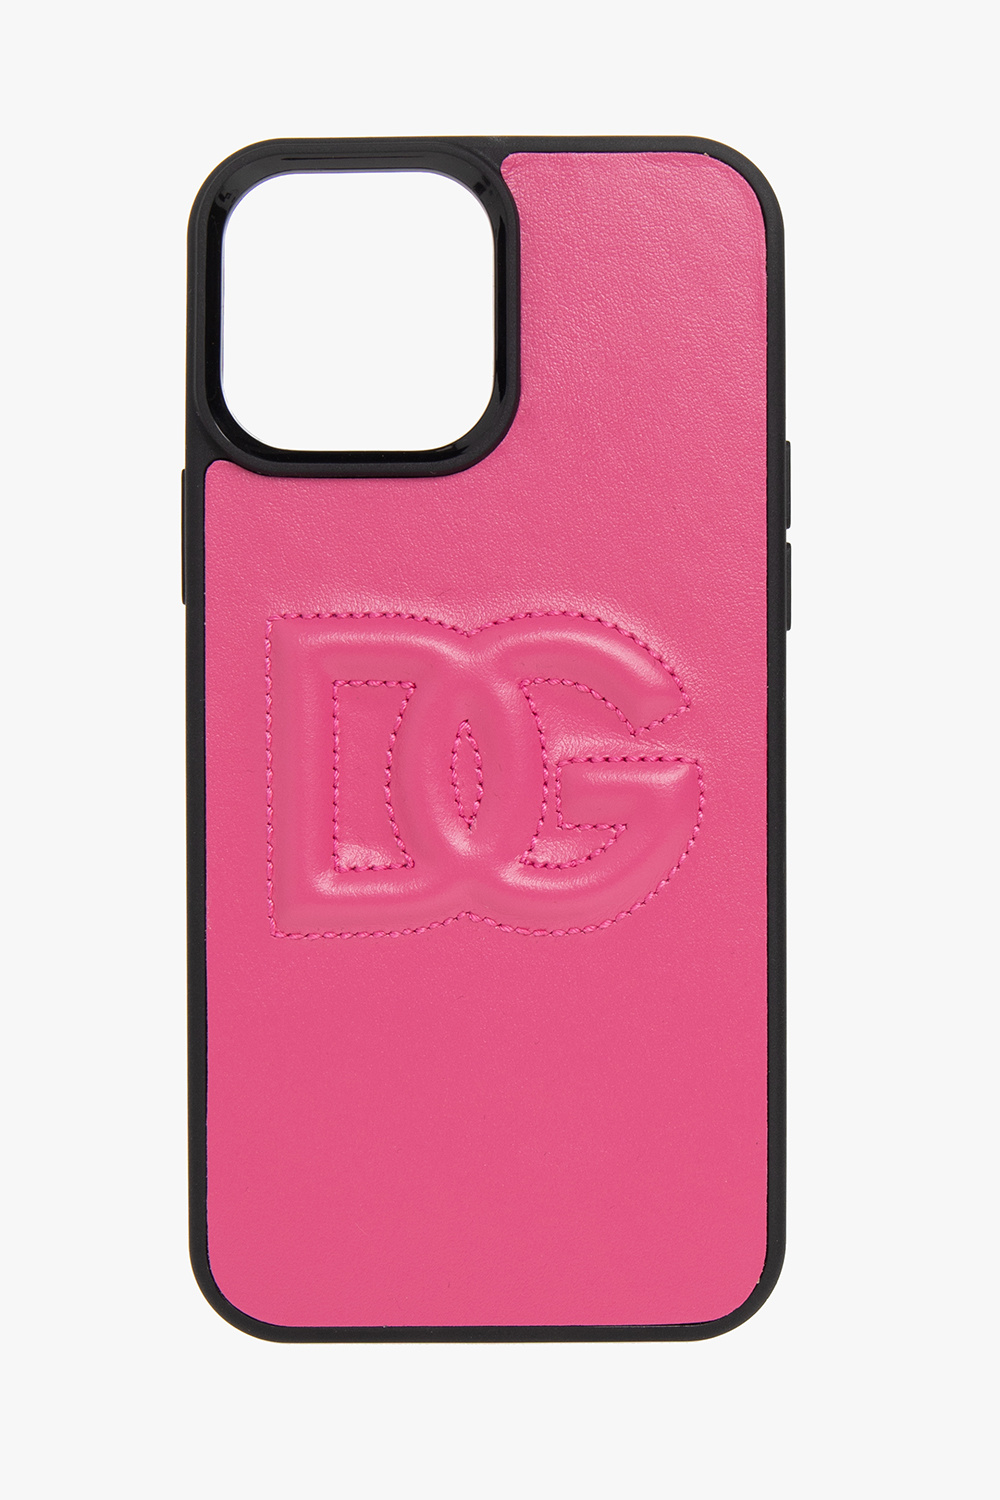 Dolce & Gabbana iPhone 13 Pro Max case